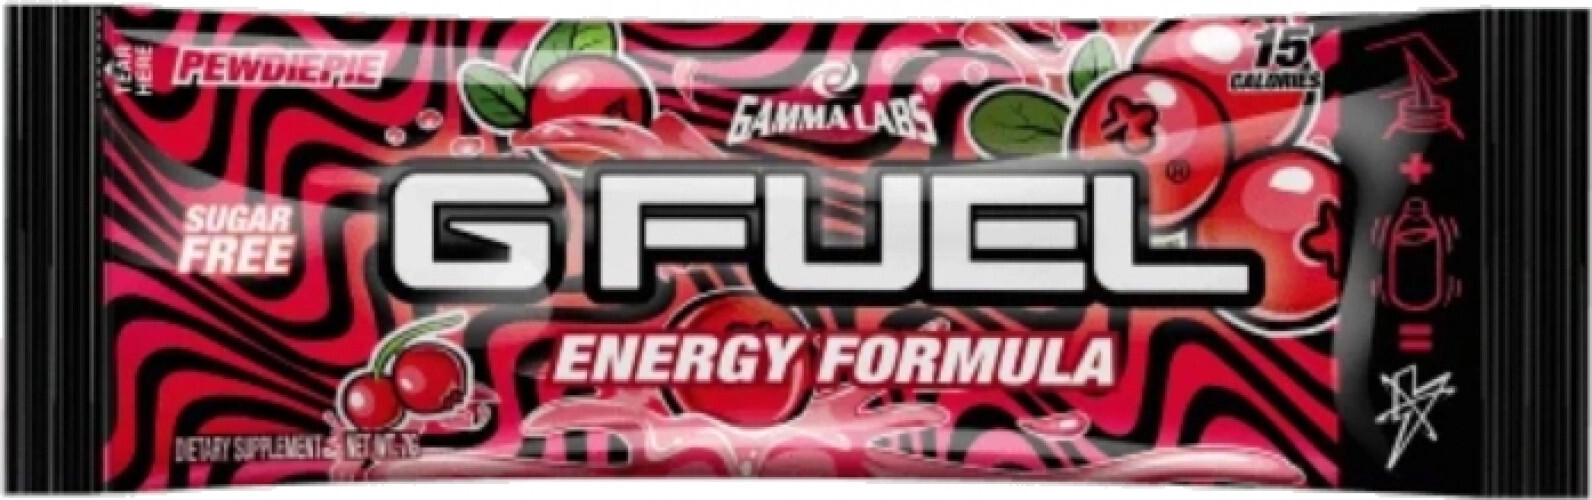 GFuel GFuel Energy Formula - Pewdiepie Sample